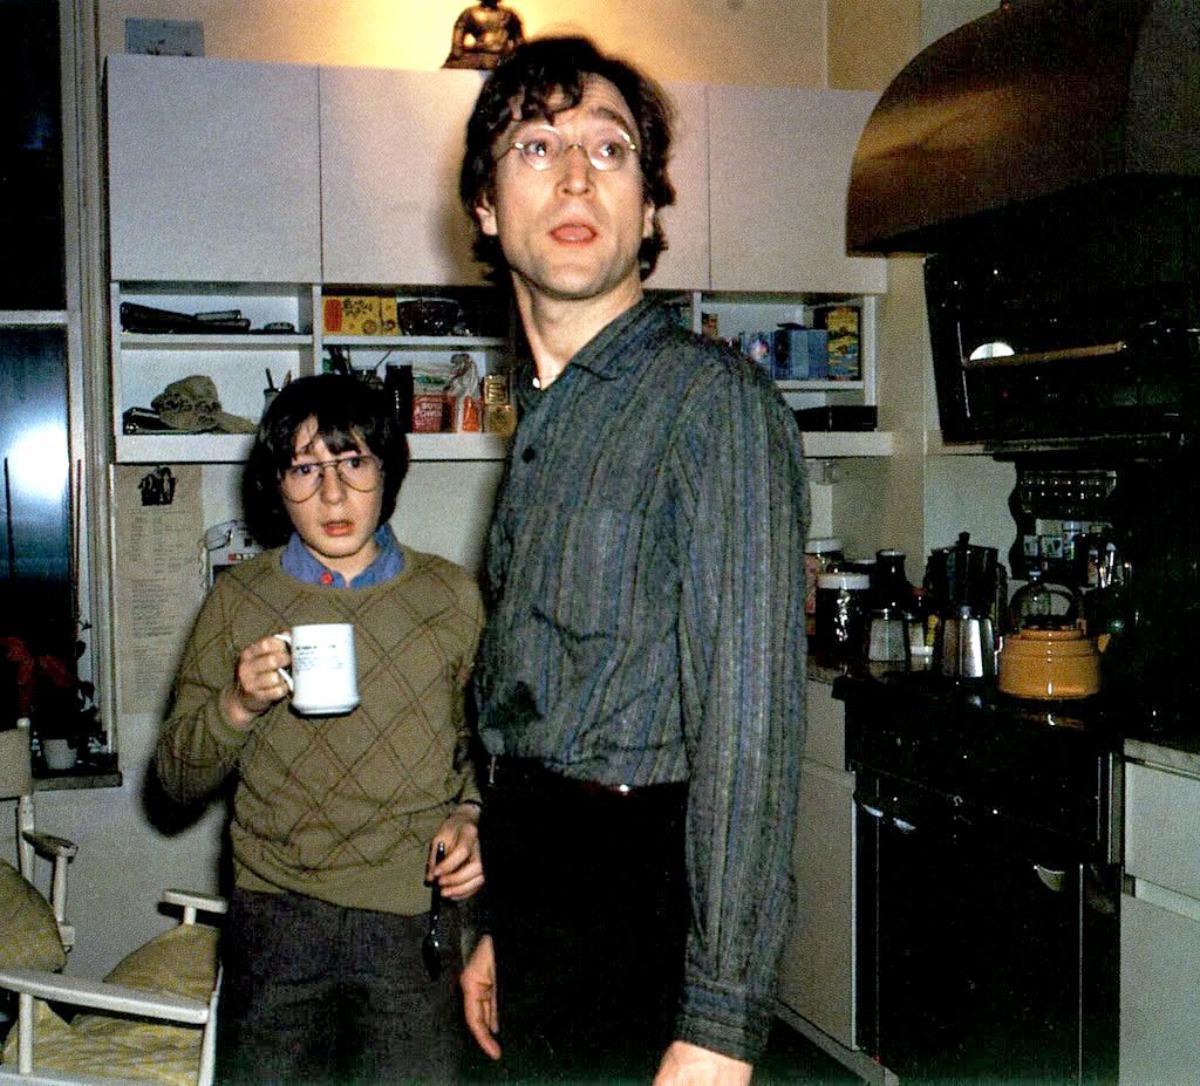 John Lennon and his son Julian